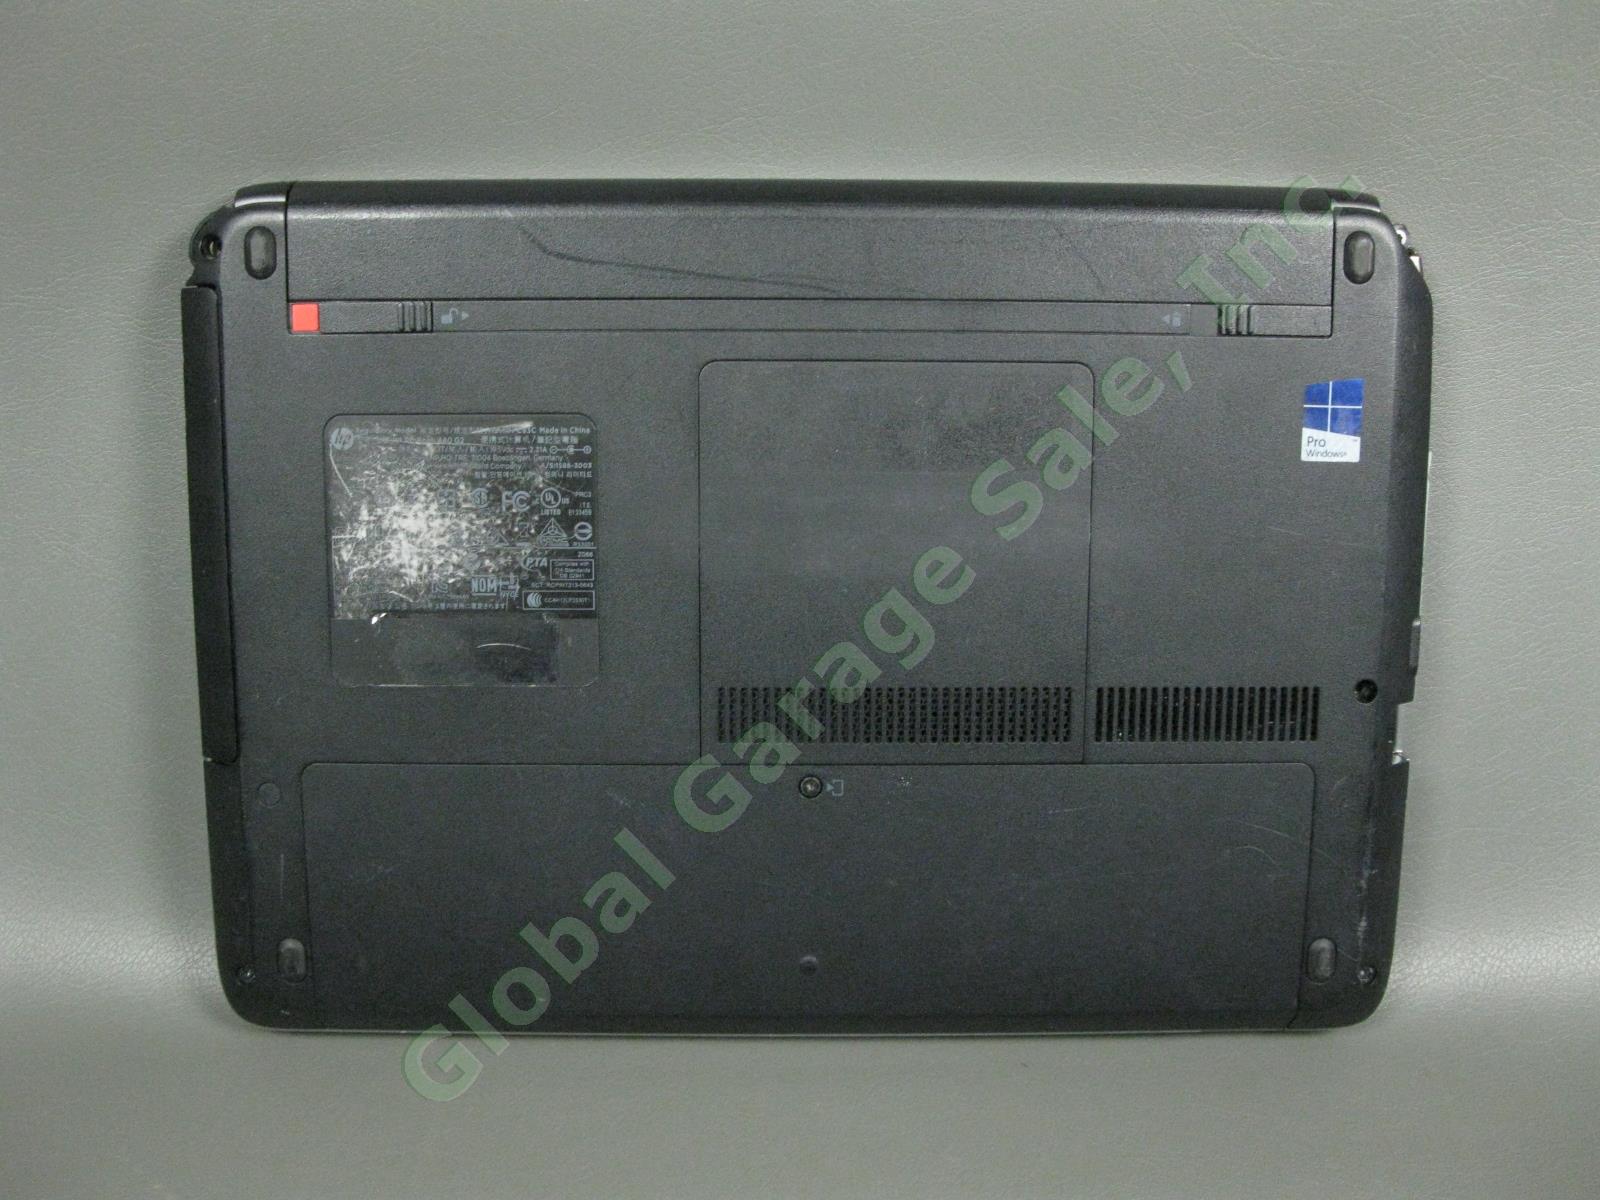 HP ProBook Black Laptop 440 G2 i5-5200U 2.20GHz 4GB RAM 460GB HD Windows 10 Pro 8